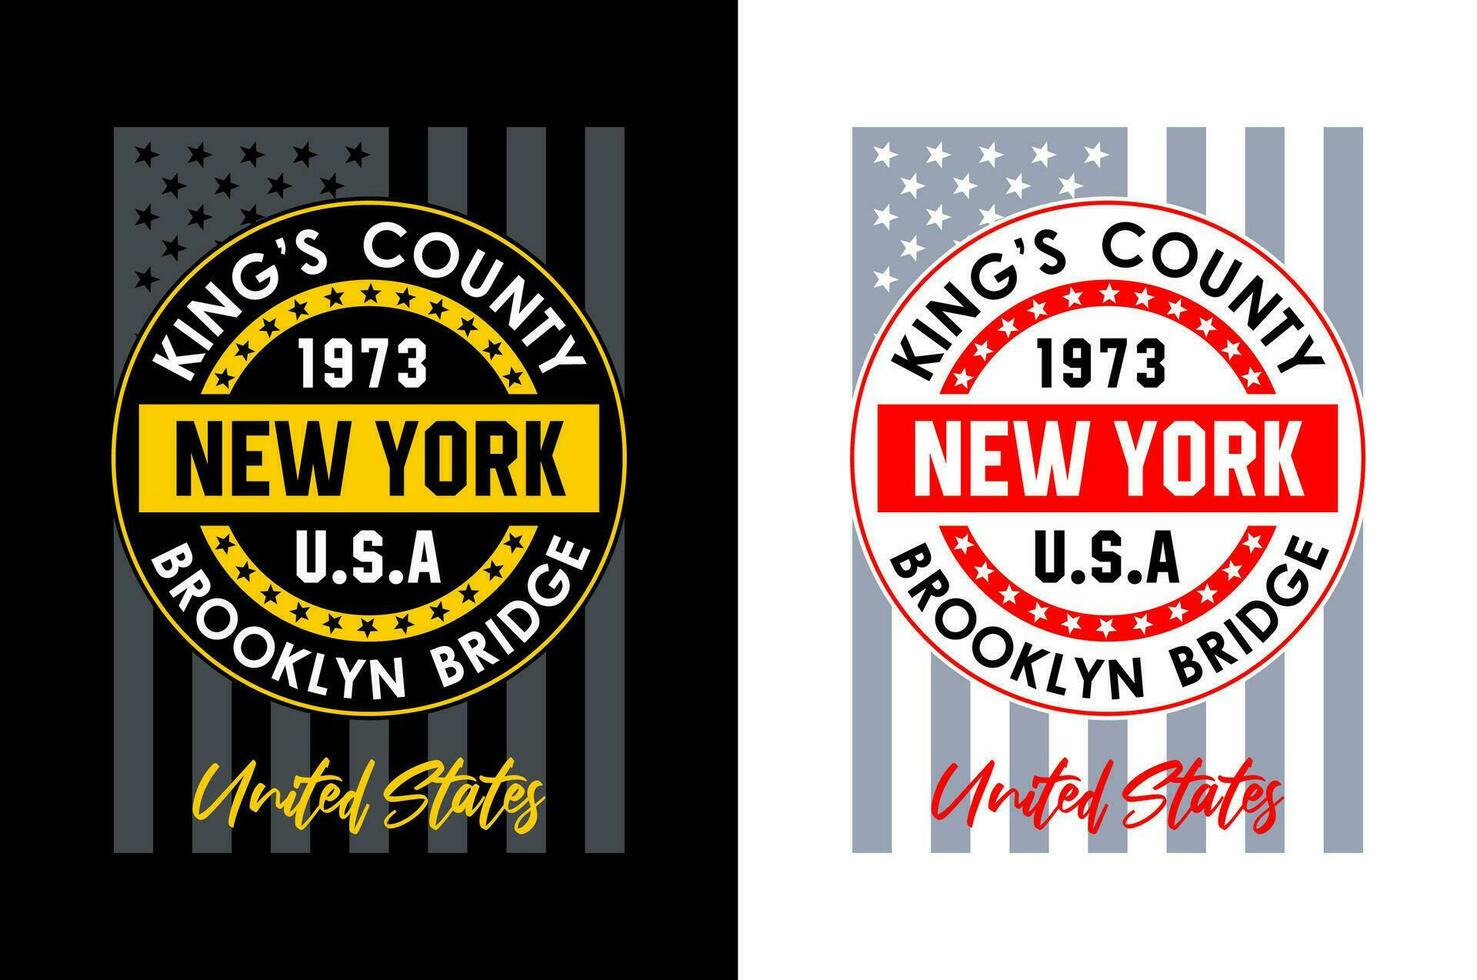 USA New York typography desig, for print on t shirts etc. vector